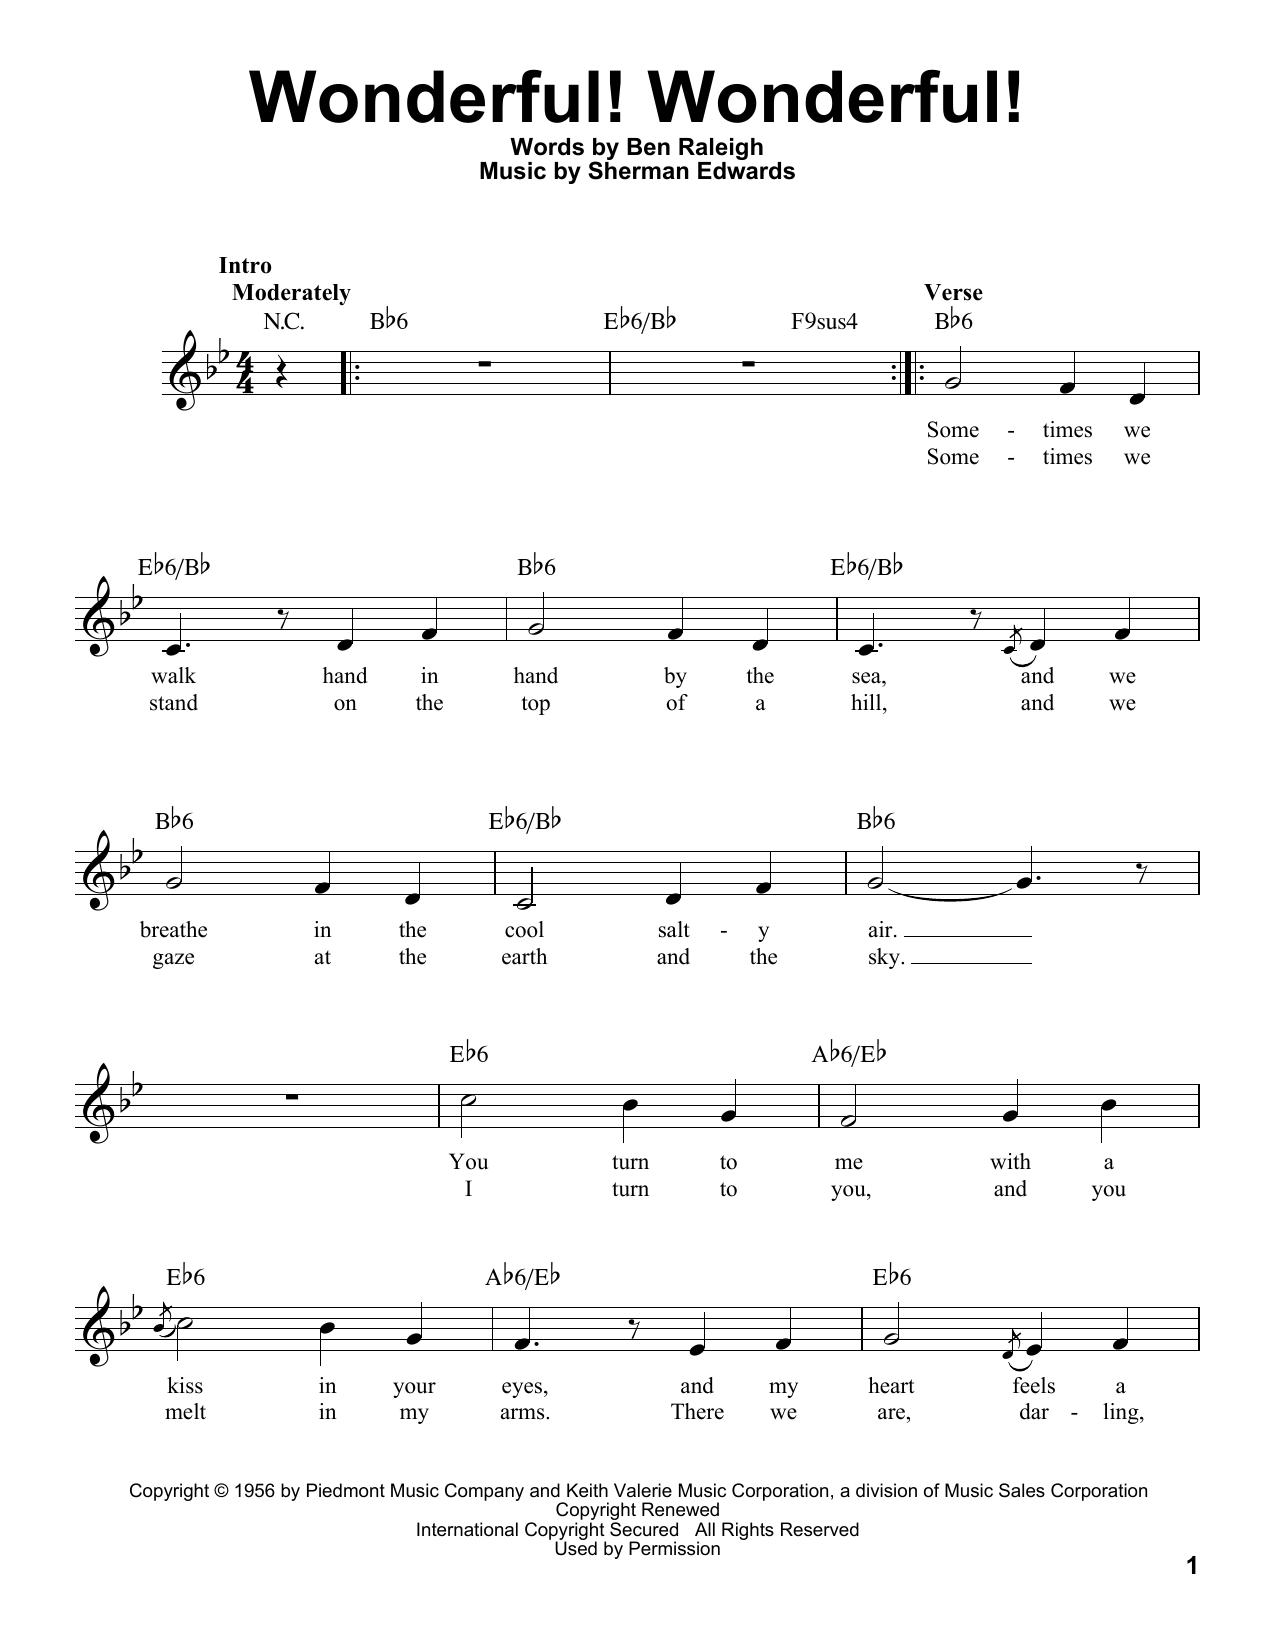 Sherman Edwards Wonderful! Wonderful! Sheet Music Notes & Chords for Voice - Download or Print PDF